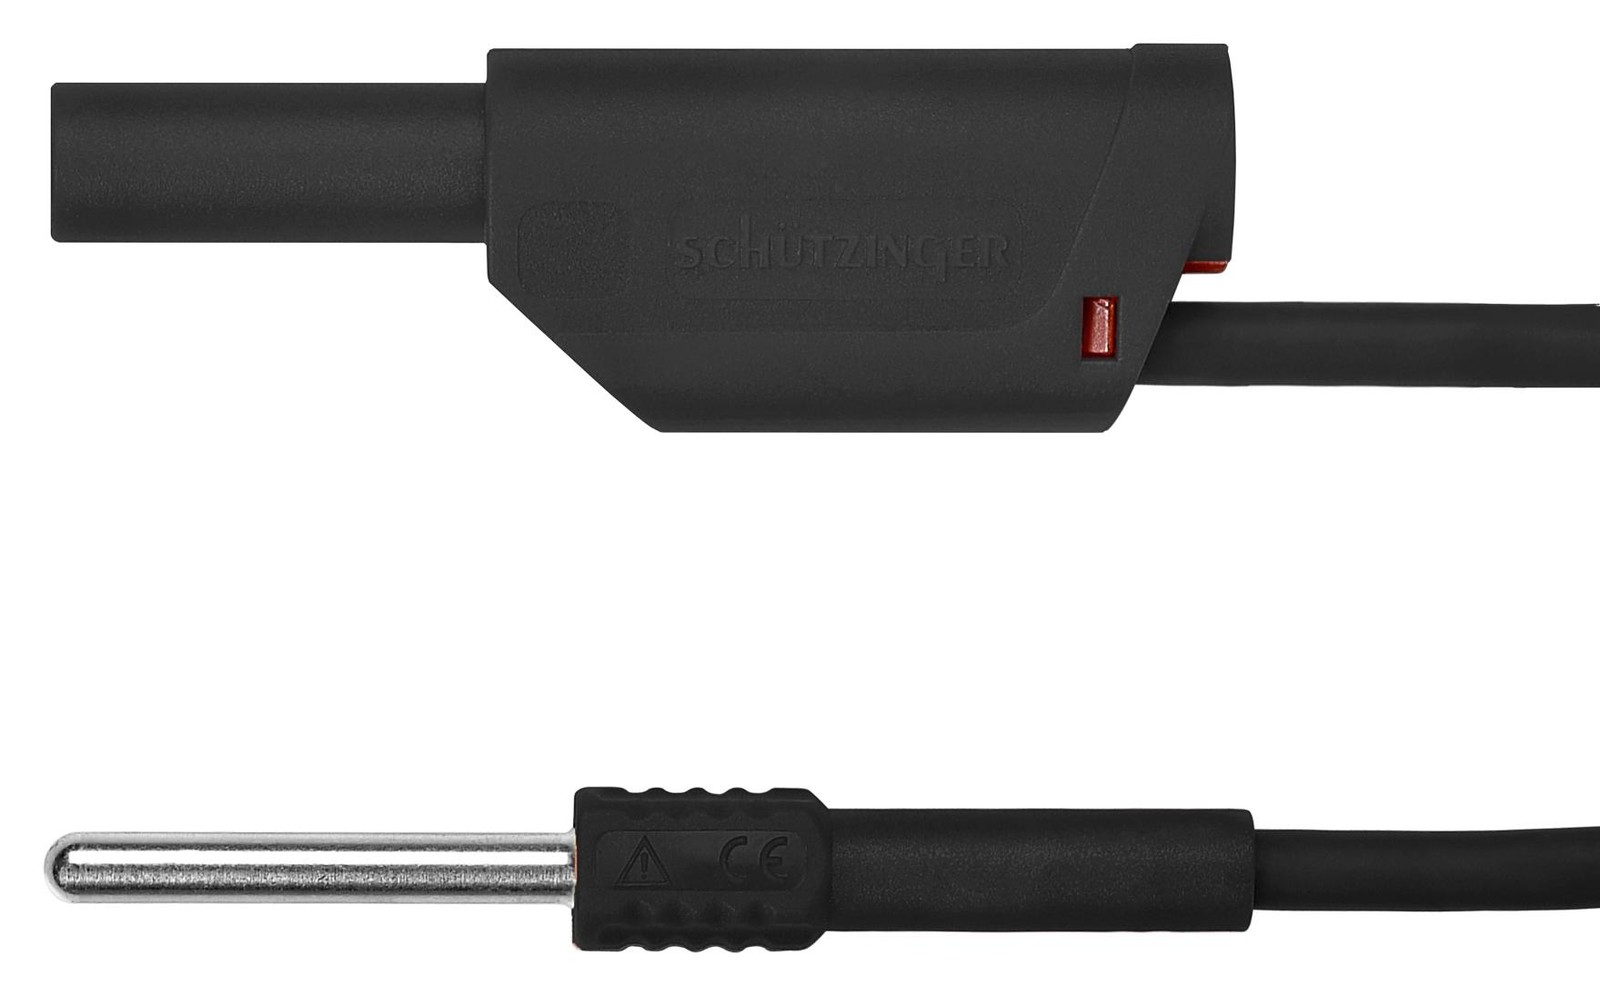 Schutzinger Al 8323 / 1 / 100 / Sw Test Lead, 4Mm Plug-Pin Tip Plug, 1M